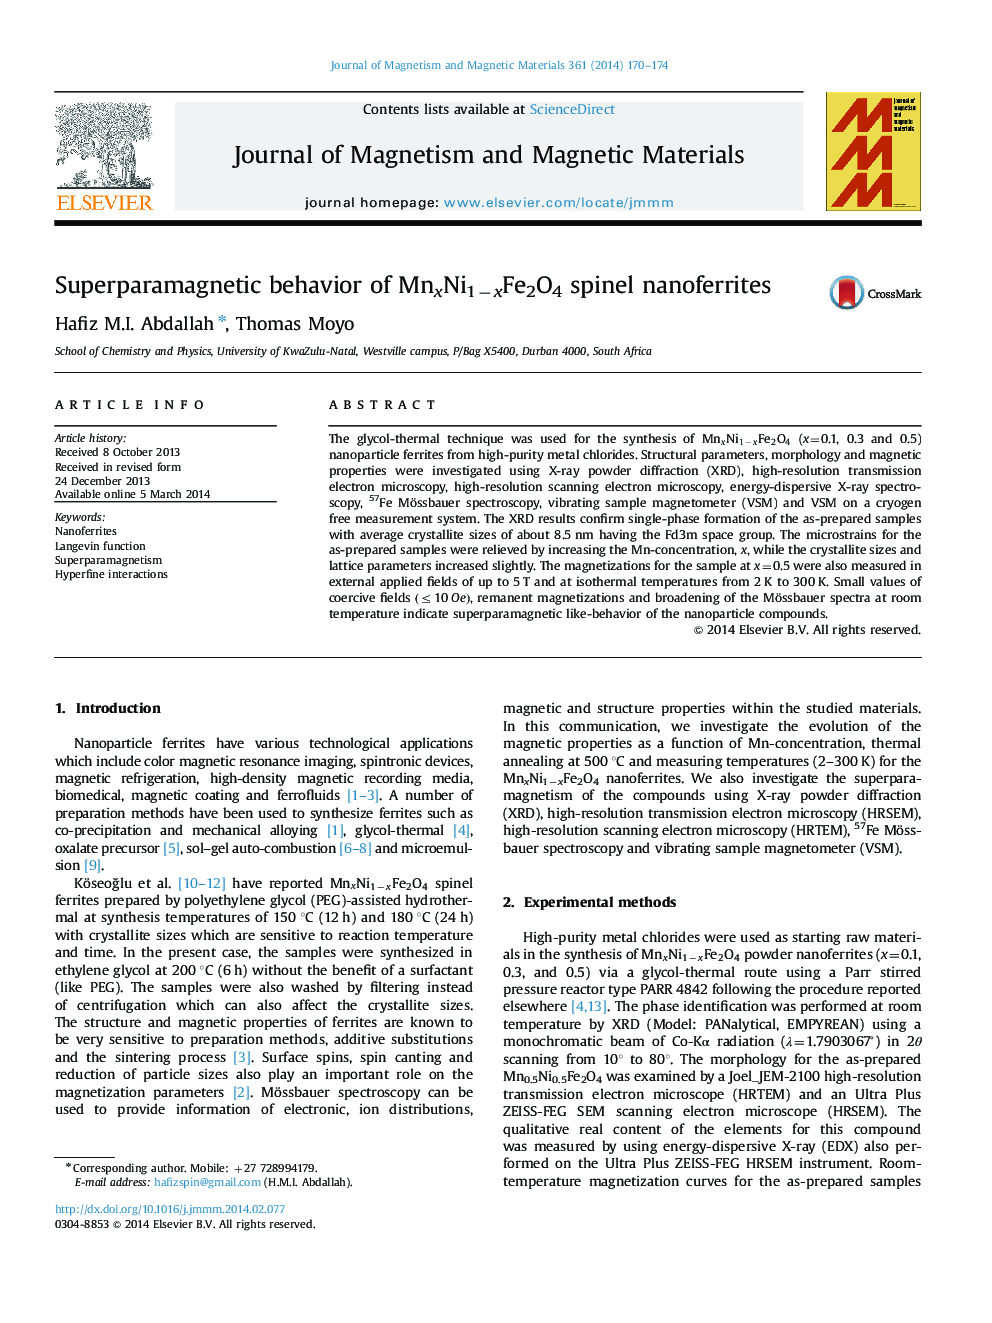 Superparamagnetic behavior of MnxNi1âxFe2O4 spinel nanoferrites